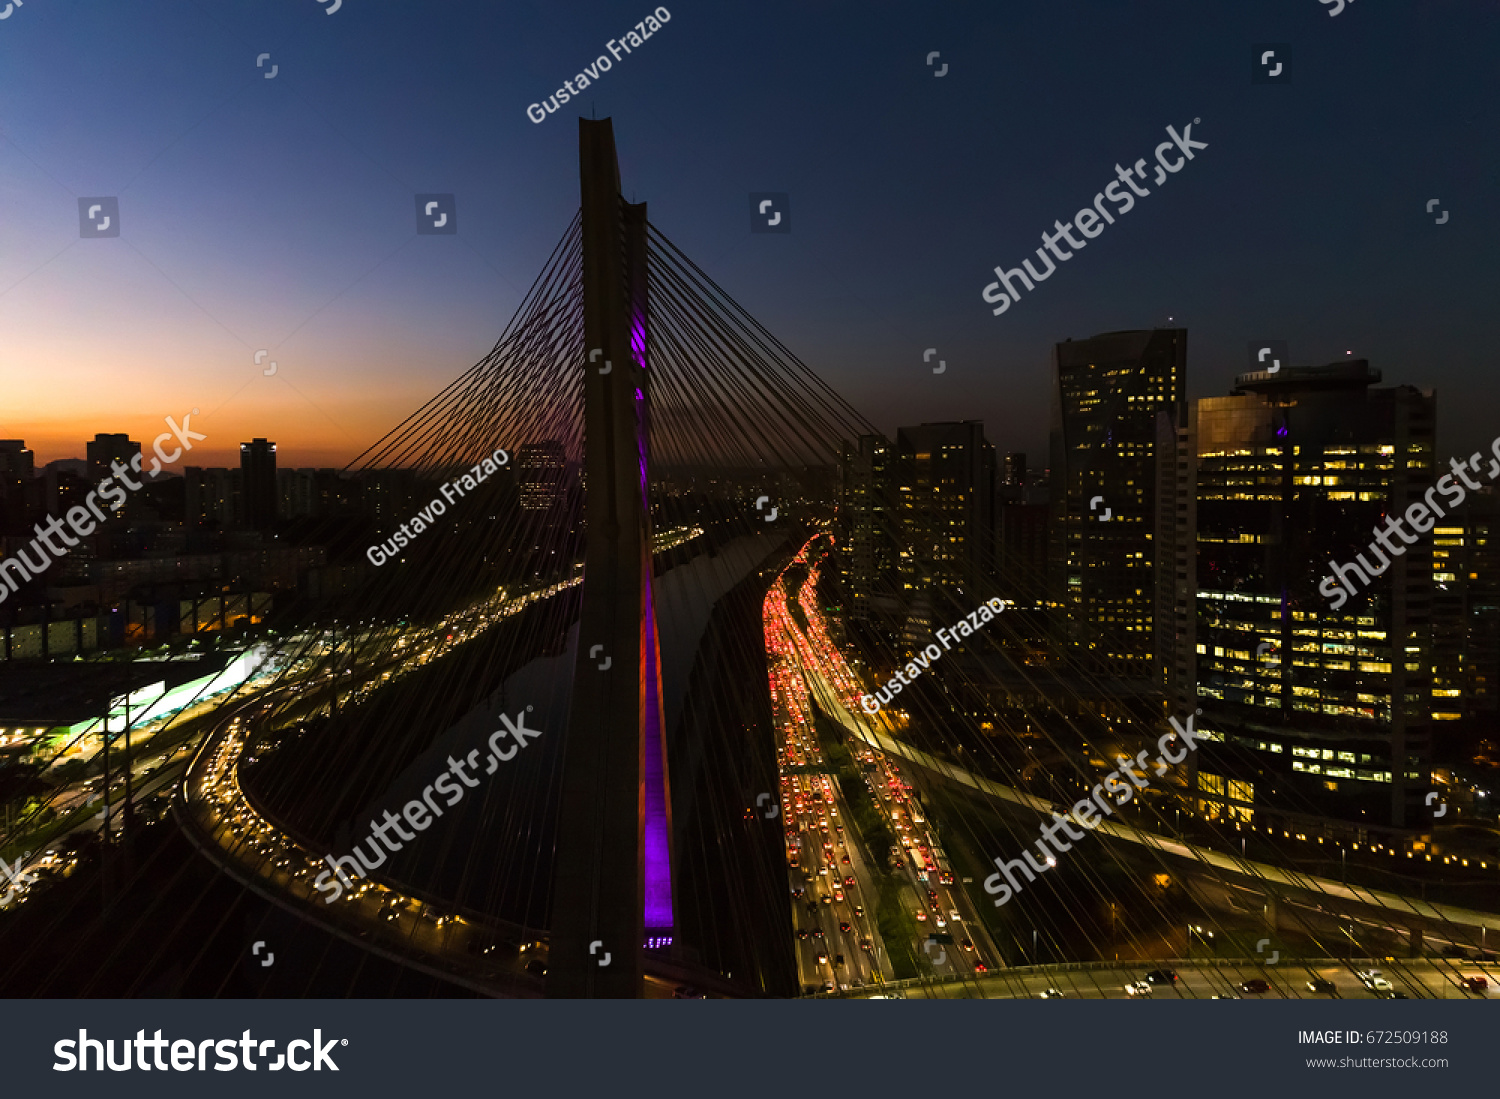 Estaiada Bridge in a Beautiful Evening Hour in Sao Paulo, Brazil #672509188